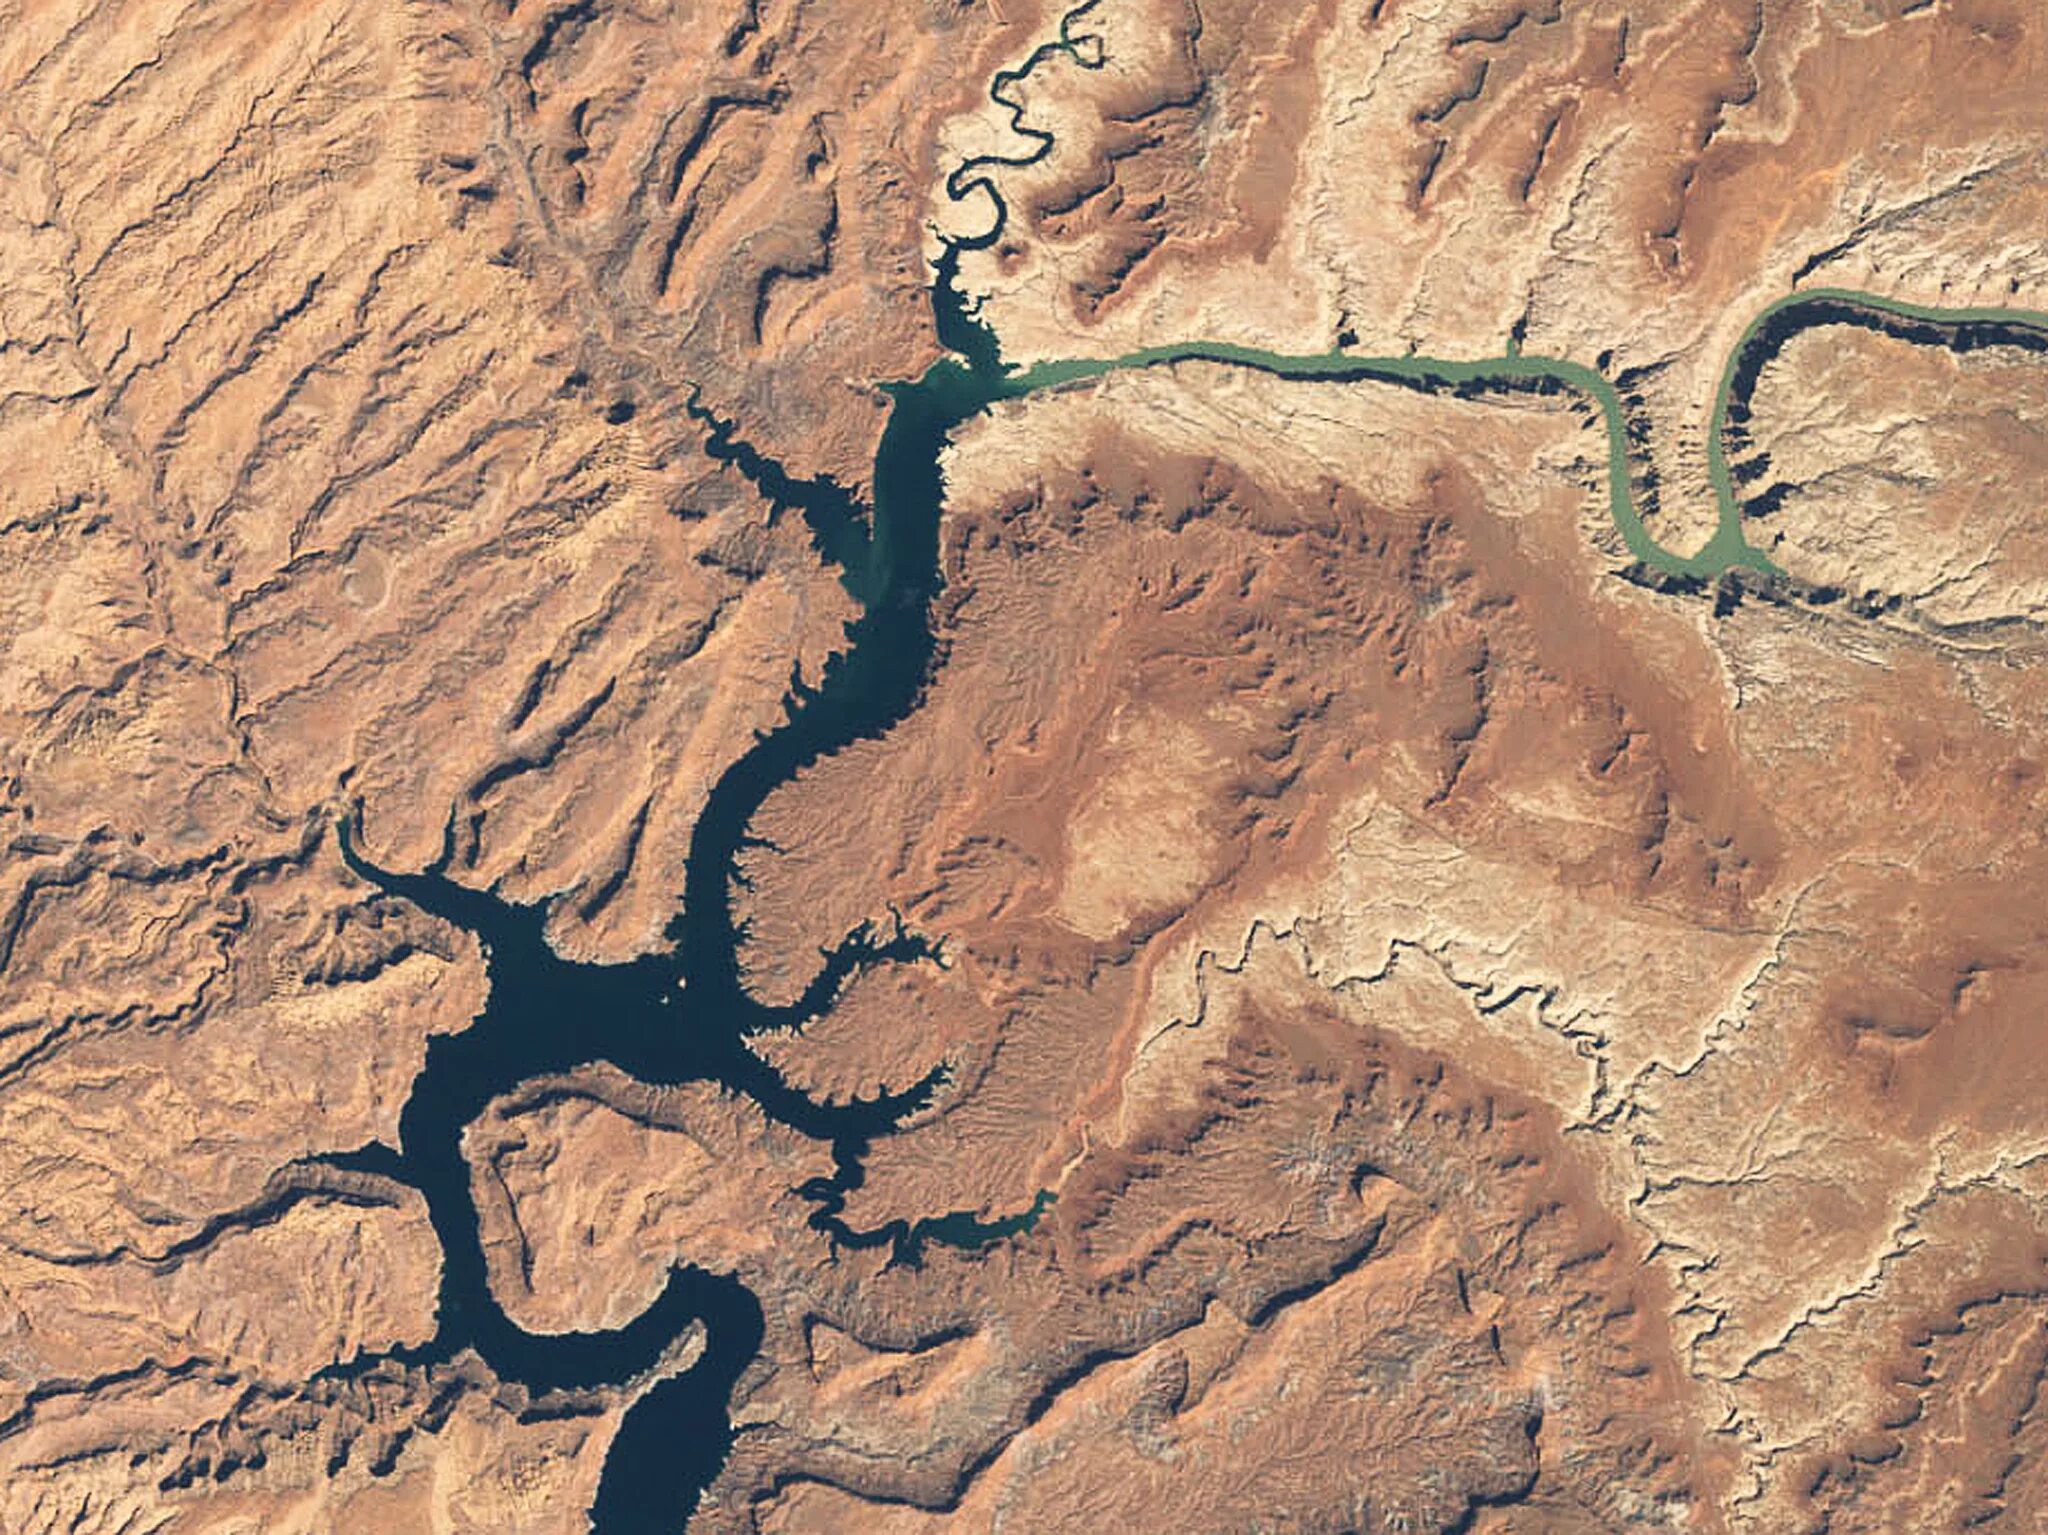 Бассейн океана реки колорадо. Каньон Колорадо на карте. Большой каньон реки Колорадо на карте.